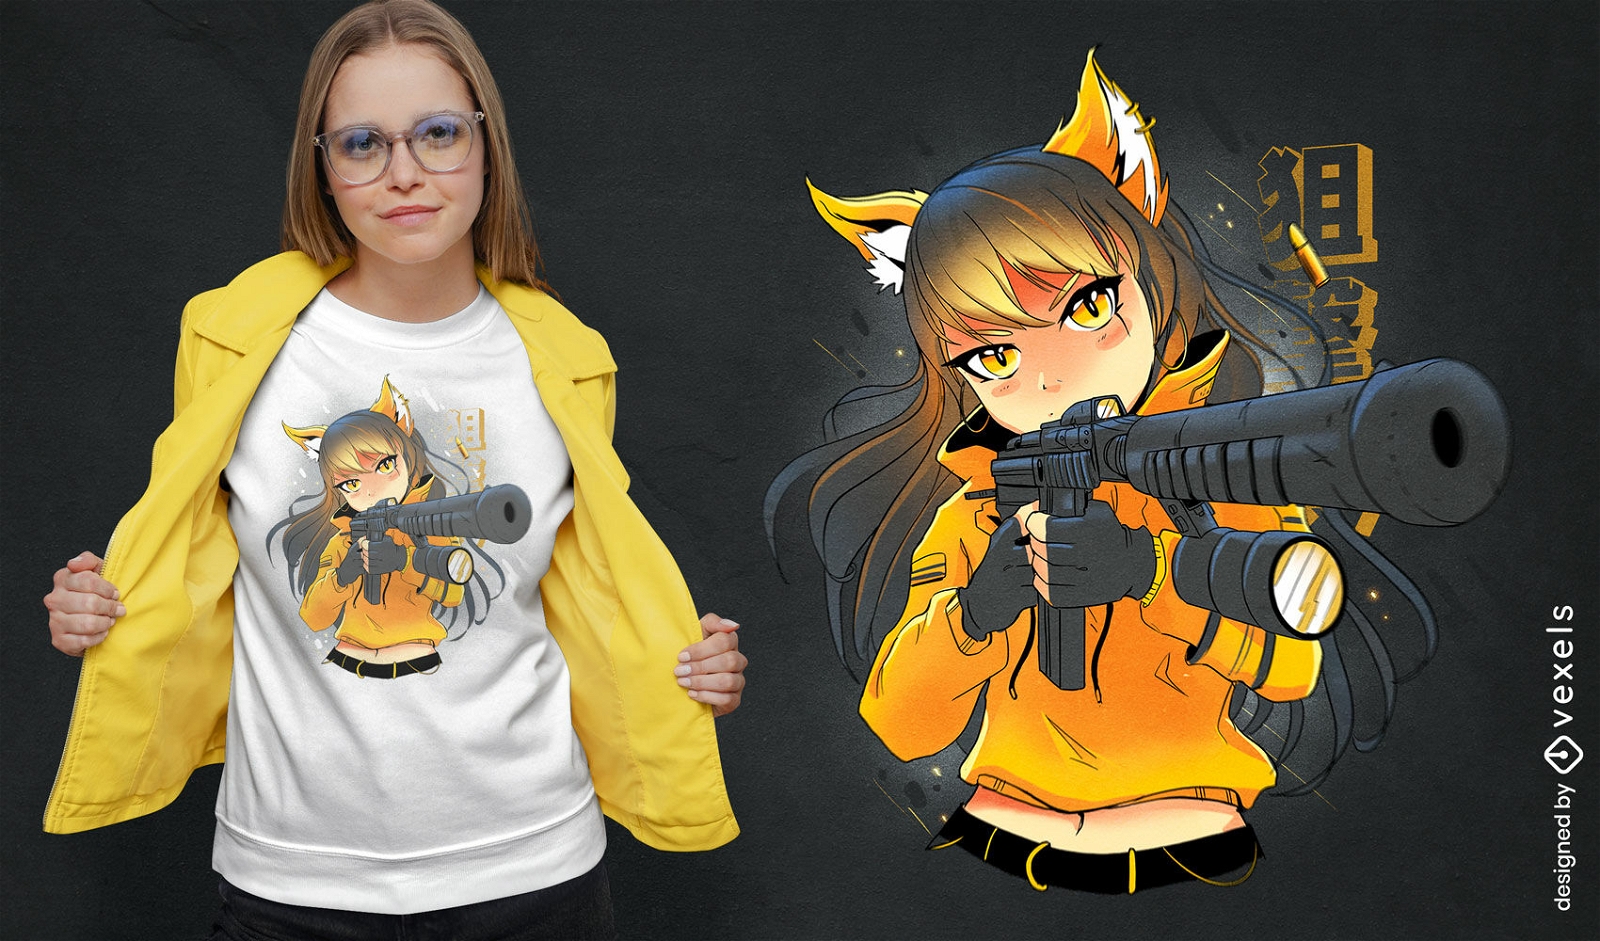 Anime army fox girl t-shirt design